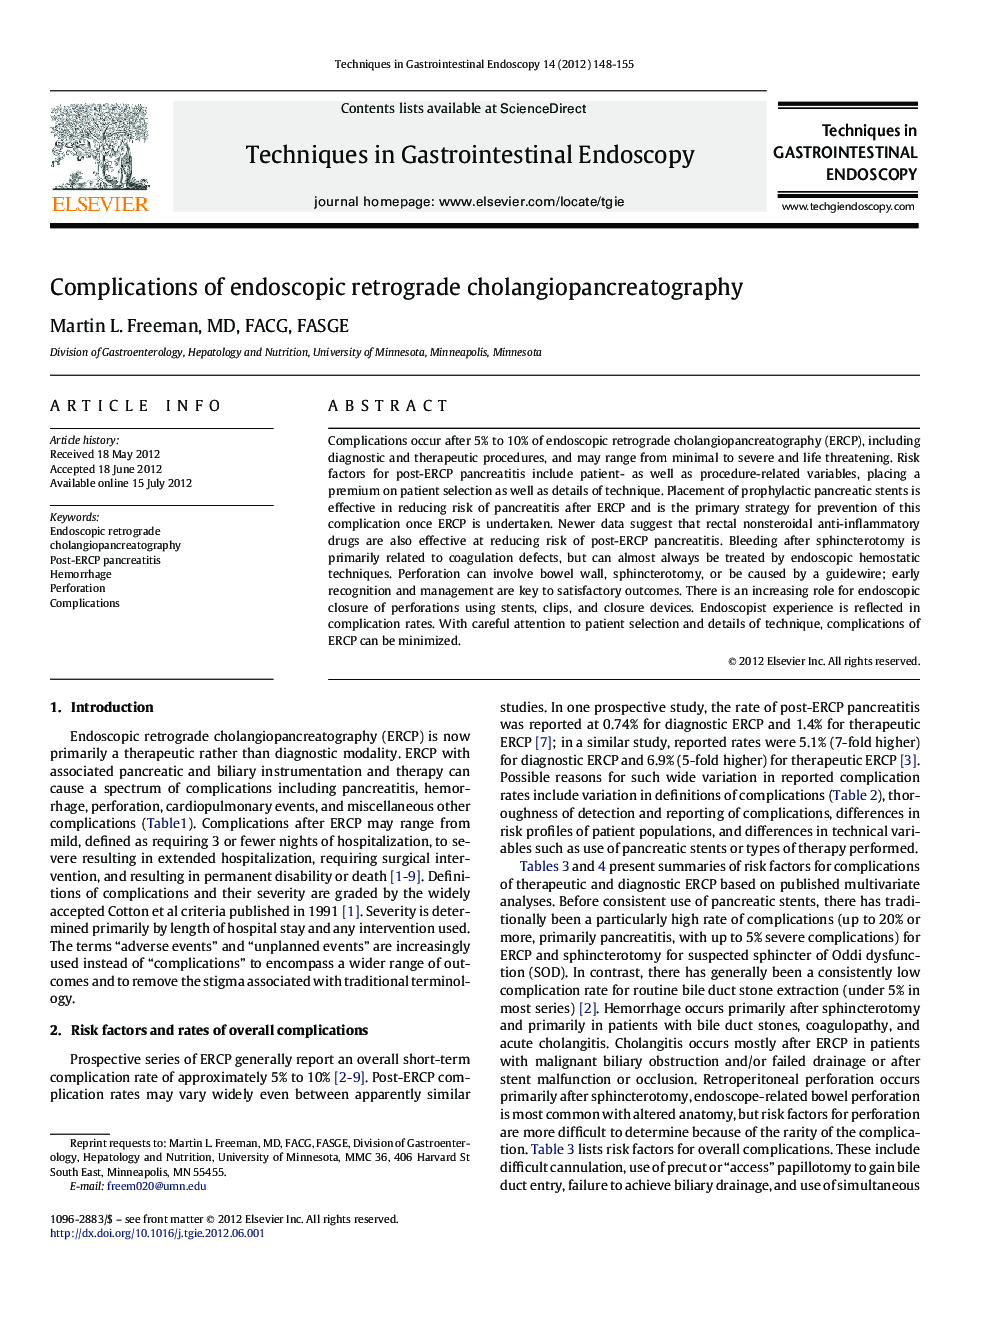 Complications of endoscopic retrograde cholangiopancreatography